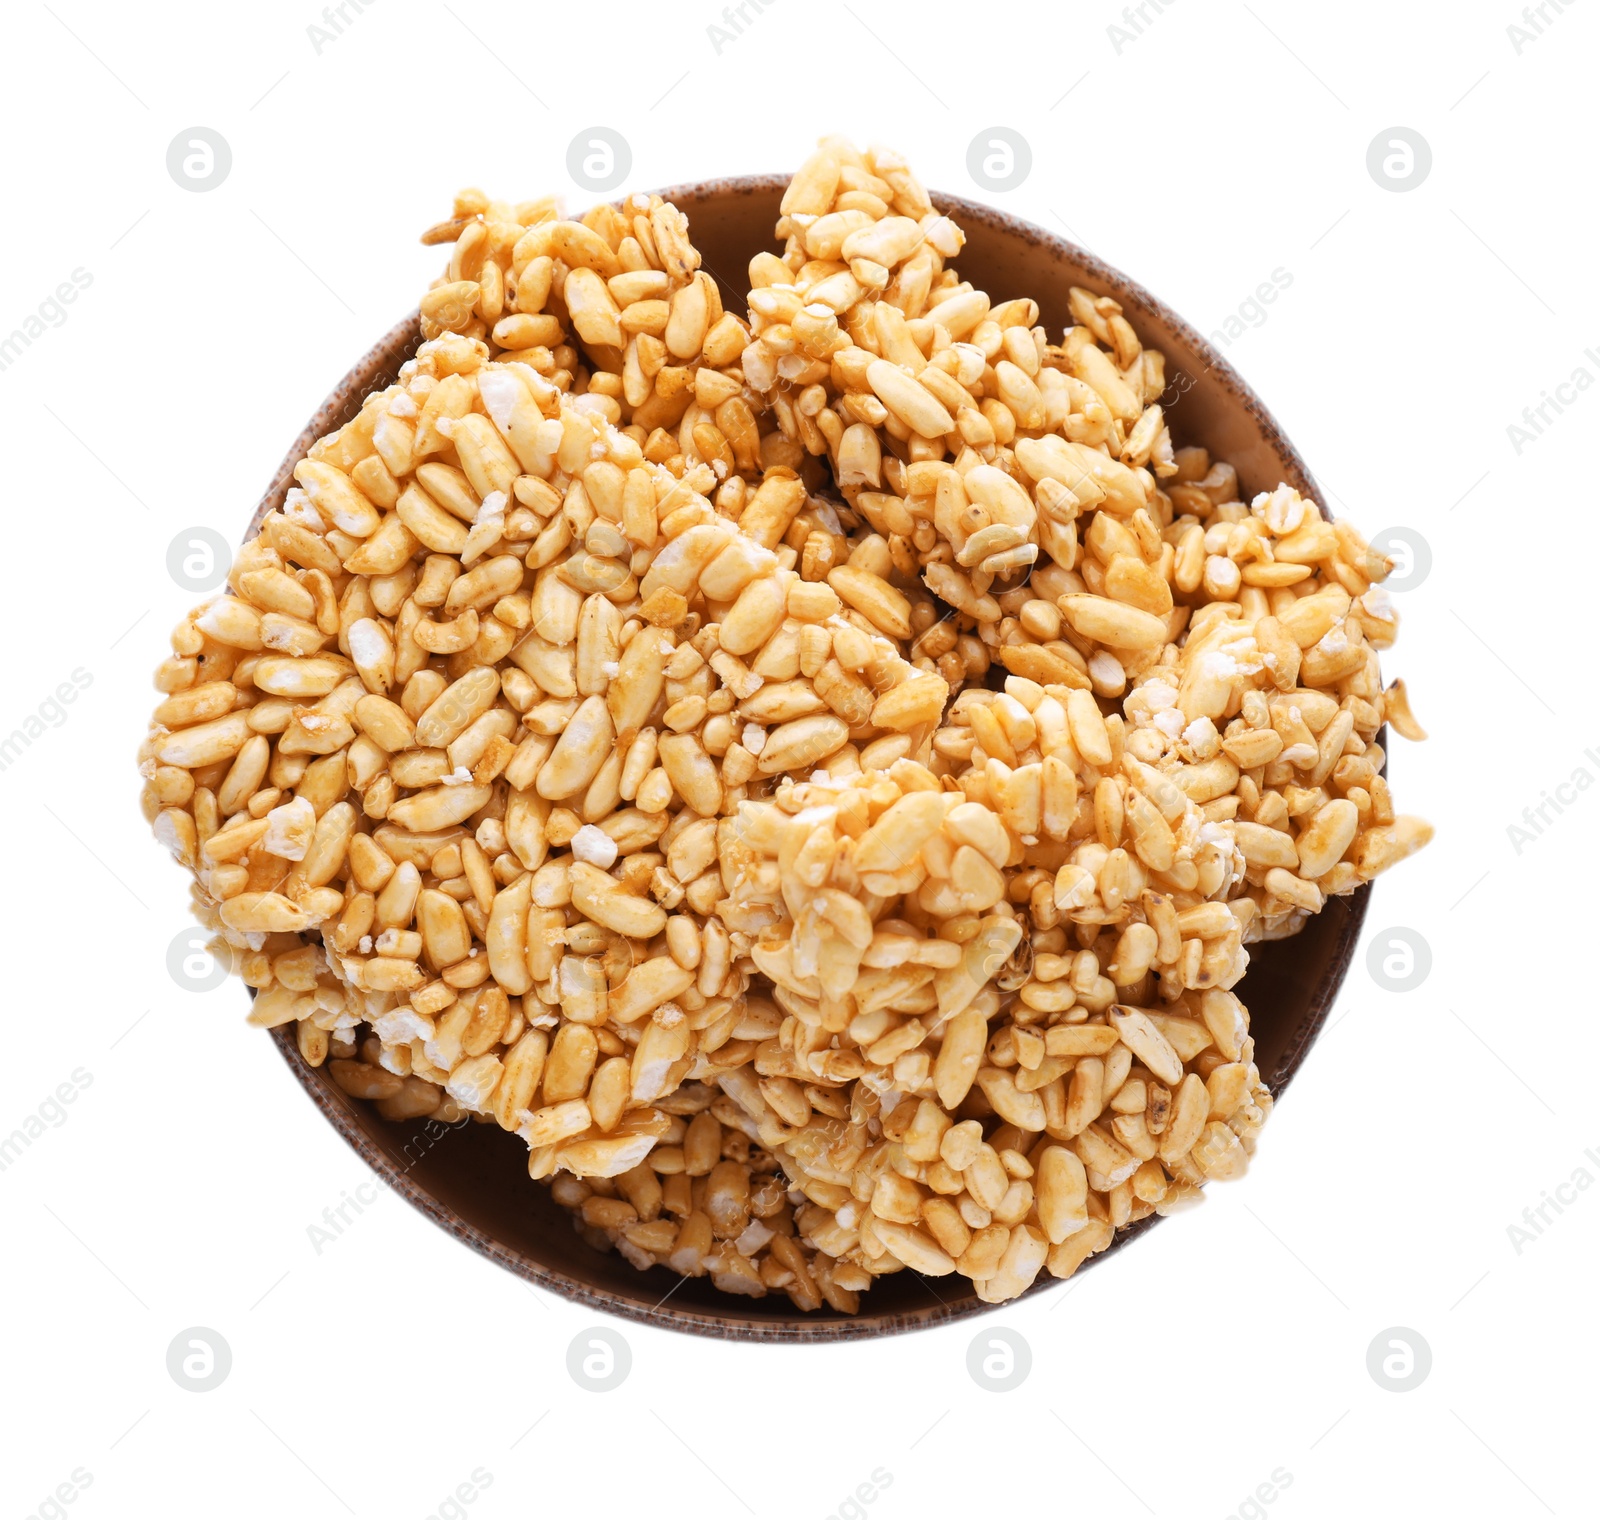 Photo of Bowl of puffed rice bars (kozinaki) on white background, top view